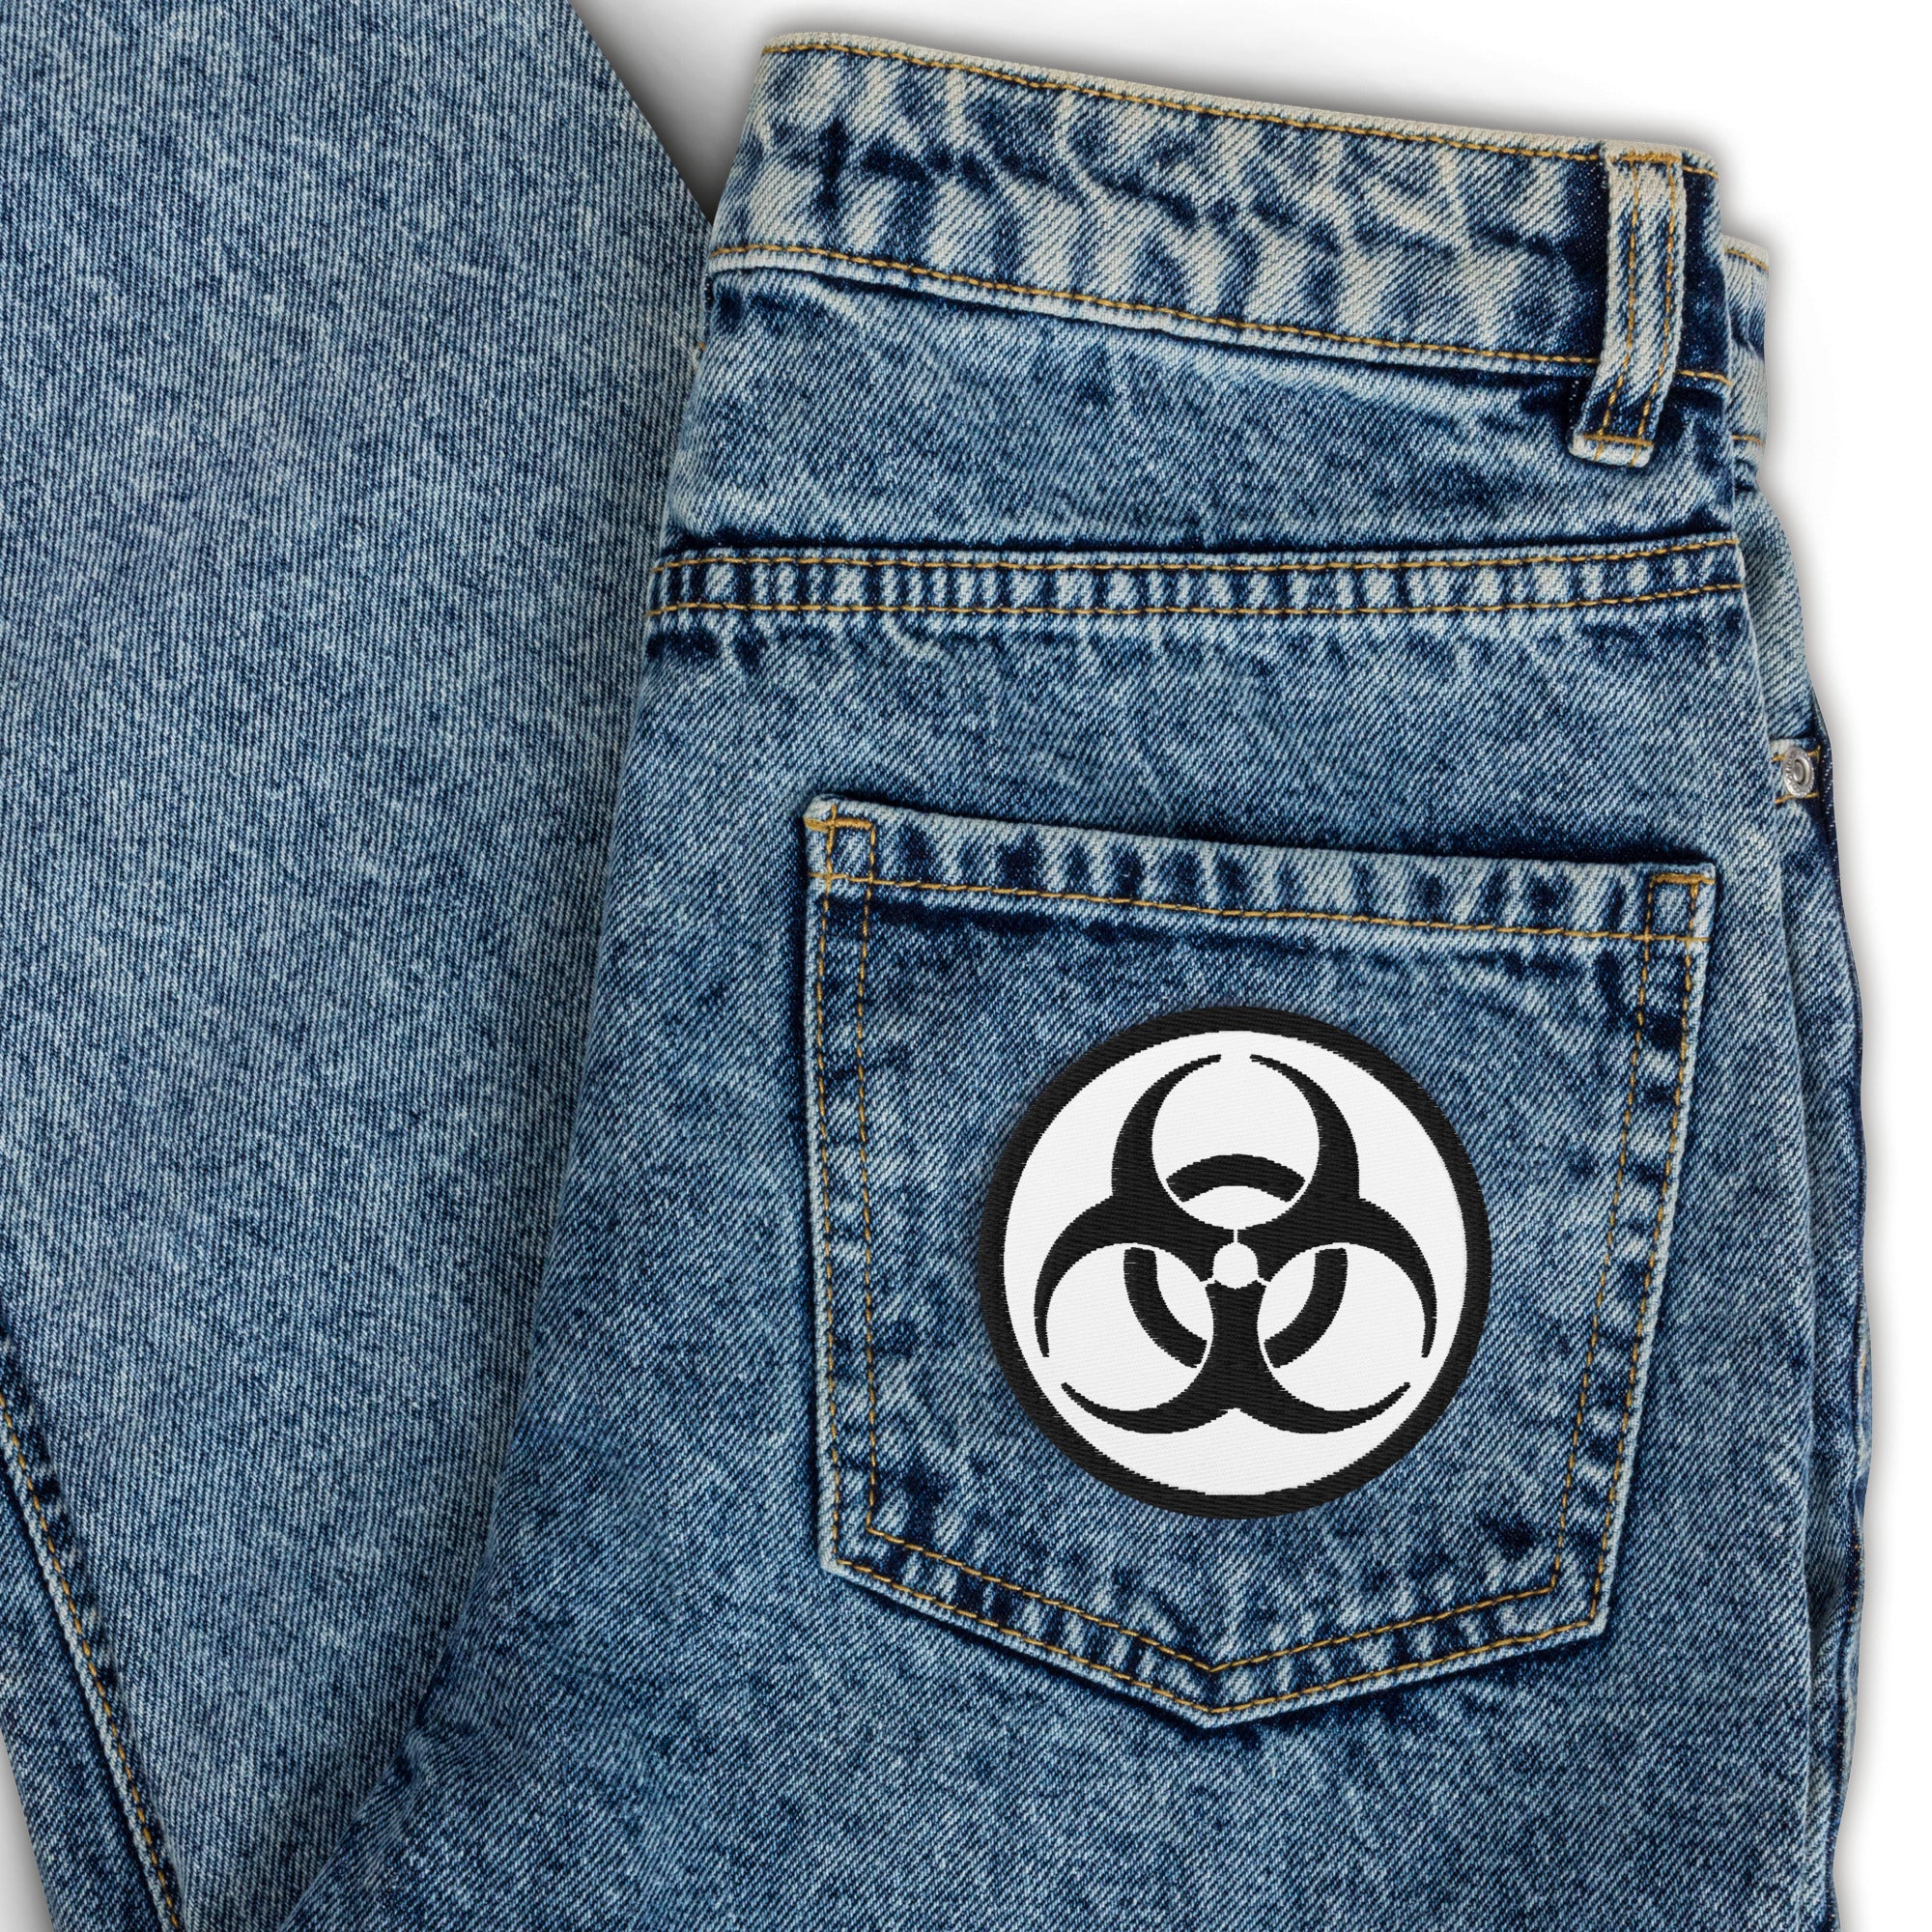 Black Thread Bio Hazard Symbol Warning Sign Embroidered Patch Zombie Apocalypse - Edge of Life Designs